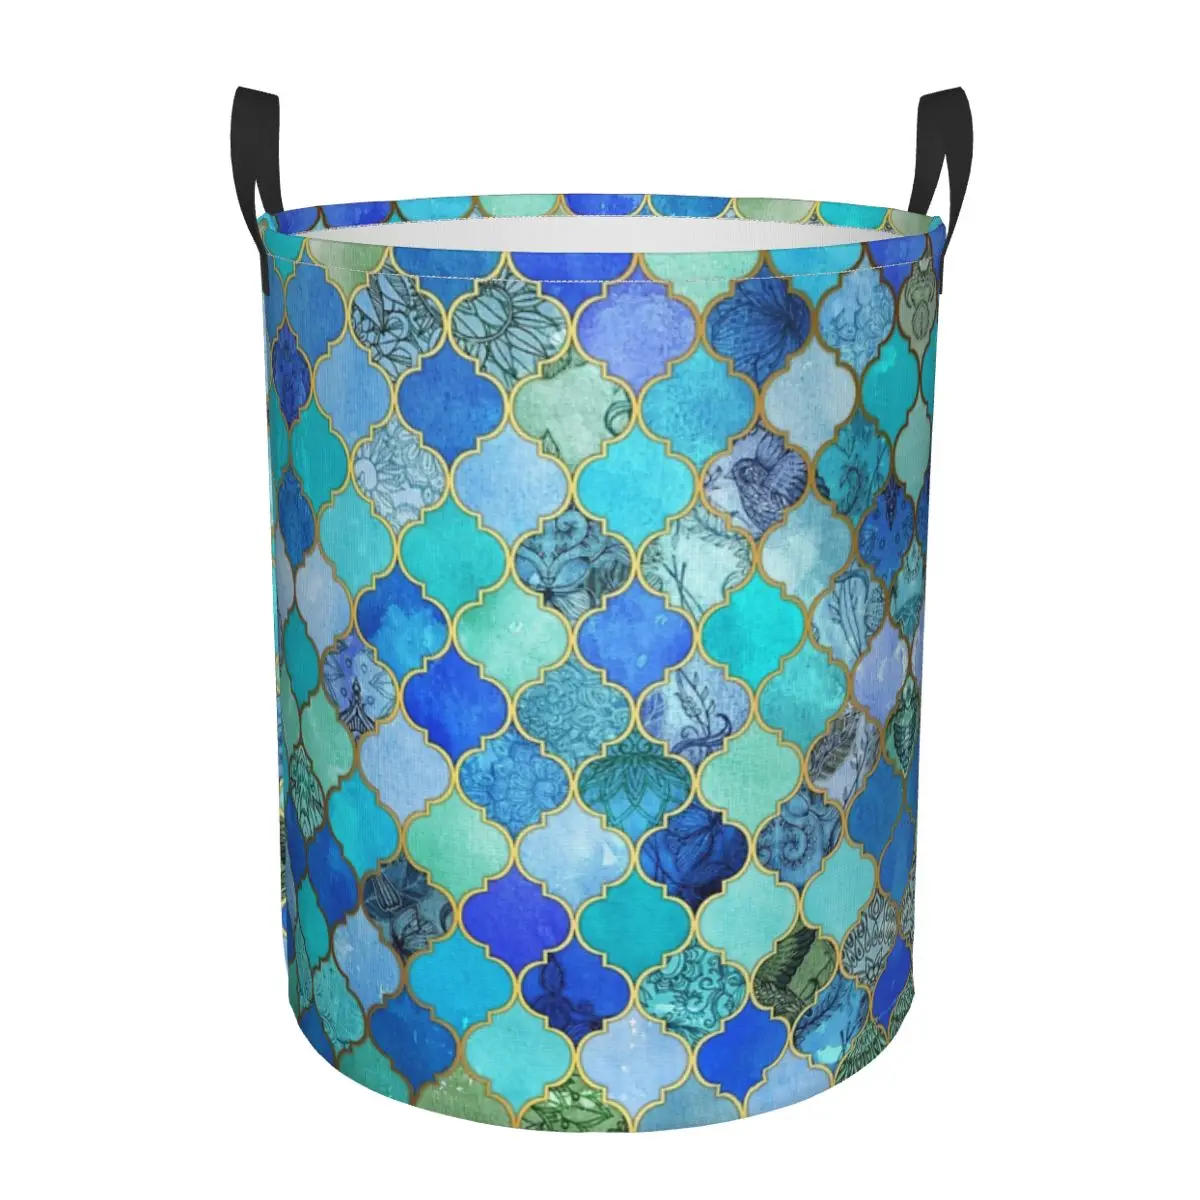 Cobalt Blue, Aqua & Gold Foldable Laundry Baskets Dirty Clothes Sundries Storage Basket Home Organizer Large Waterproof Bucket